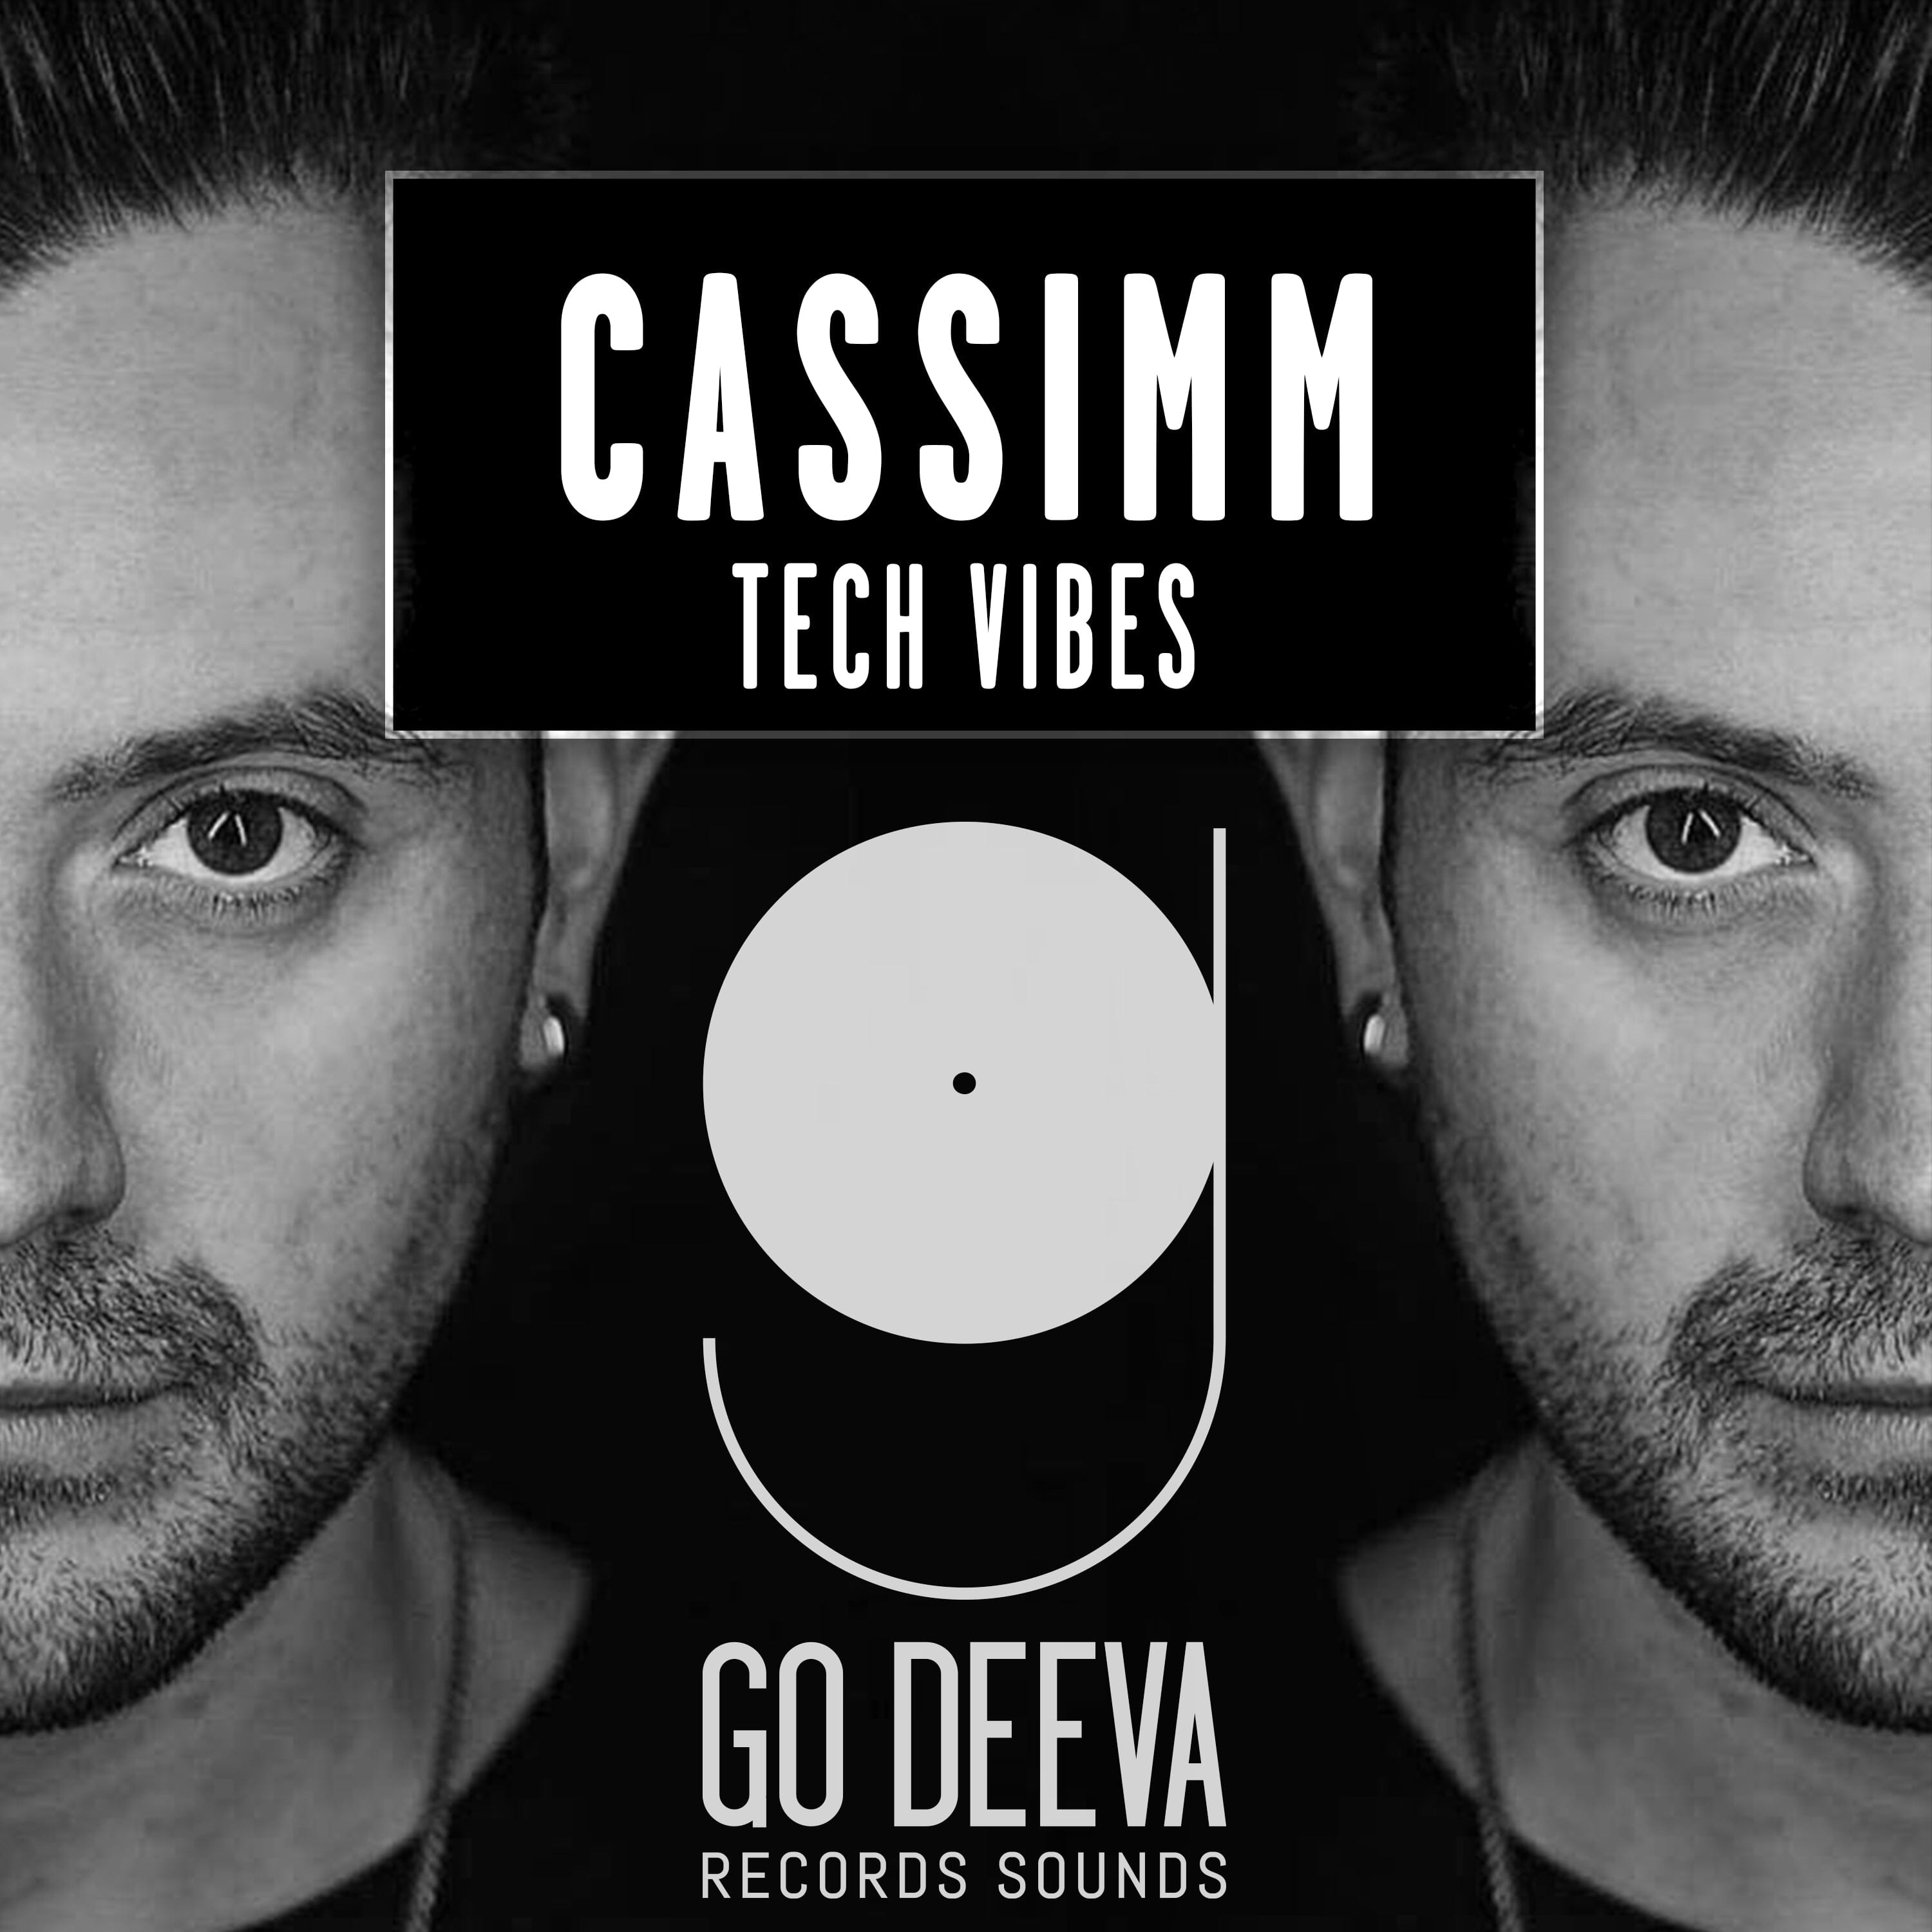 Cassimm </br> Tech Vibes Sample Pack Go Deeva Records Sounds